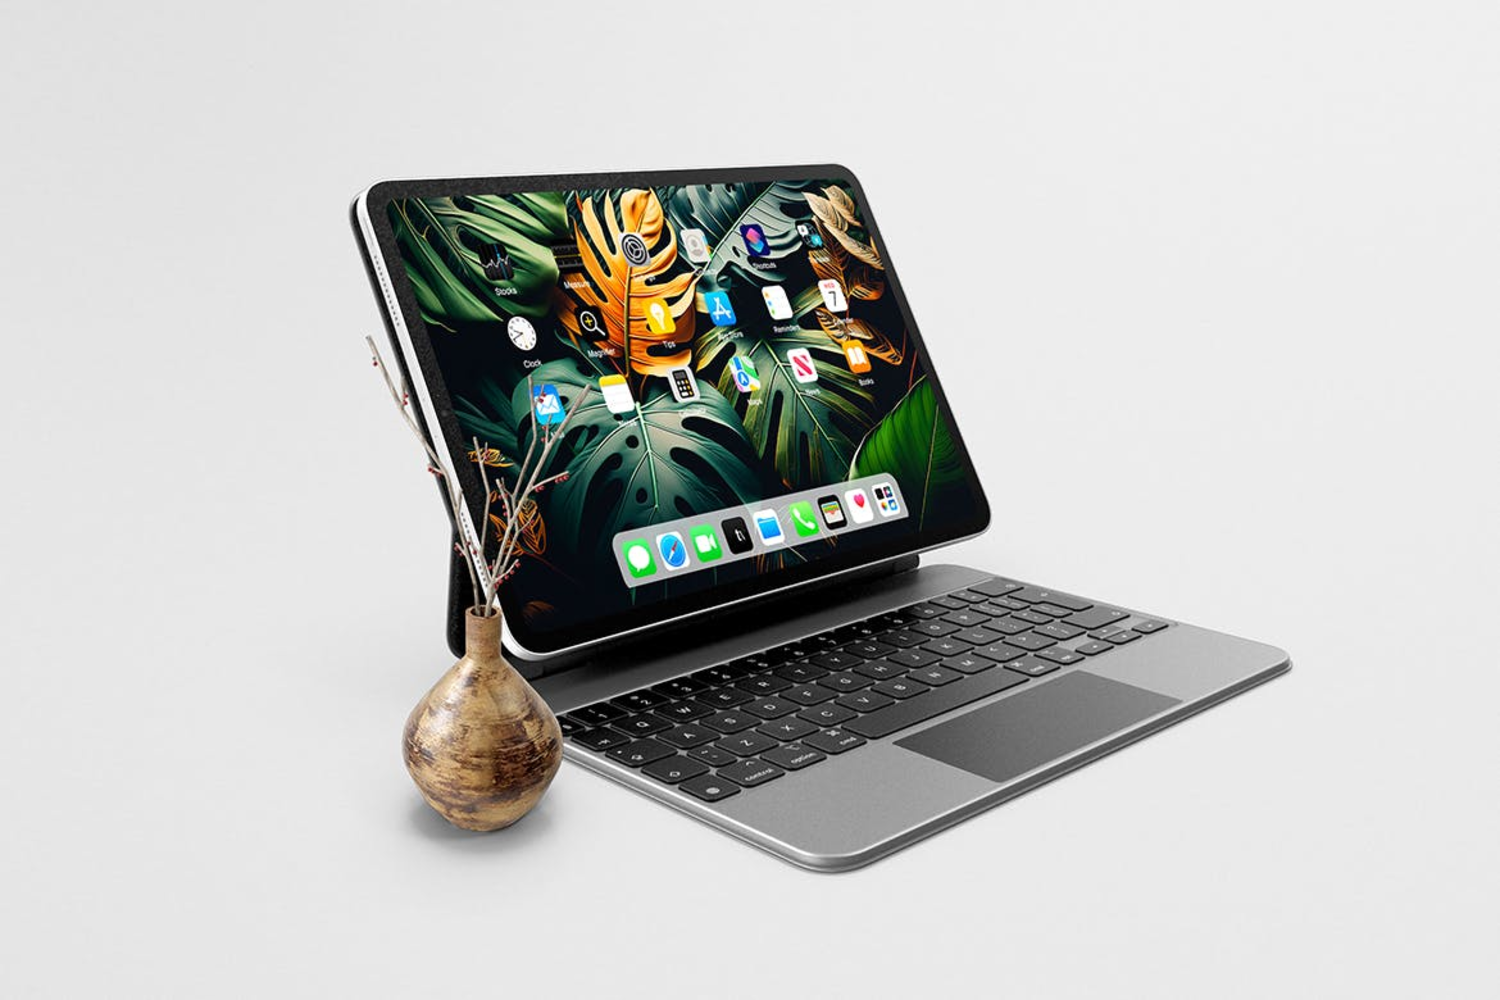 5173 6款带键盘iPad Pro样机PSD模型素材 iPad Pro With Keyboard Mockup@GOOODME.COM